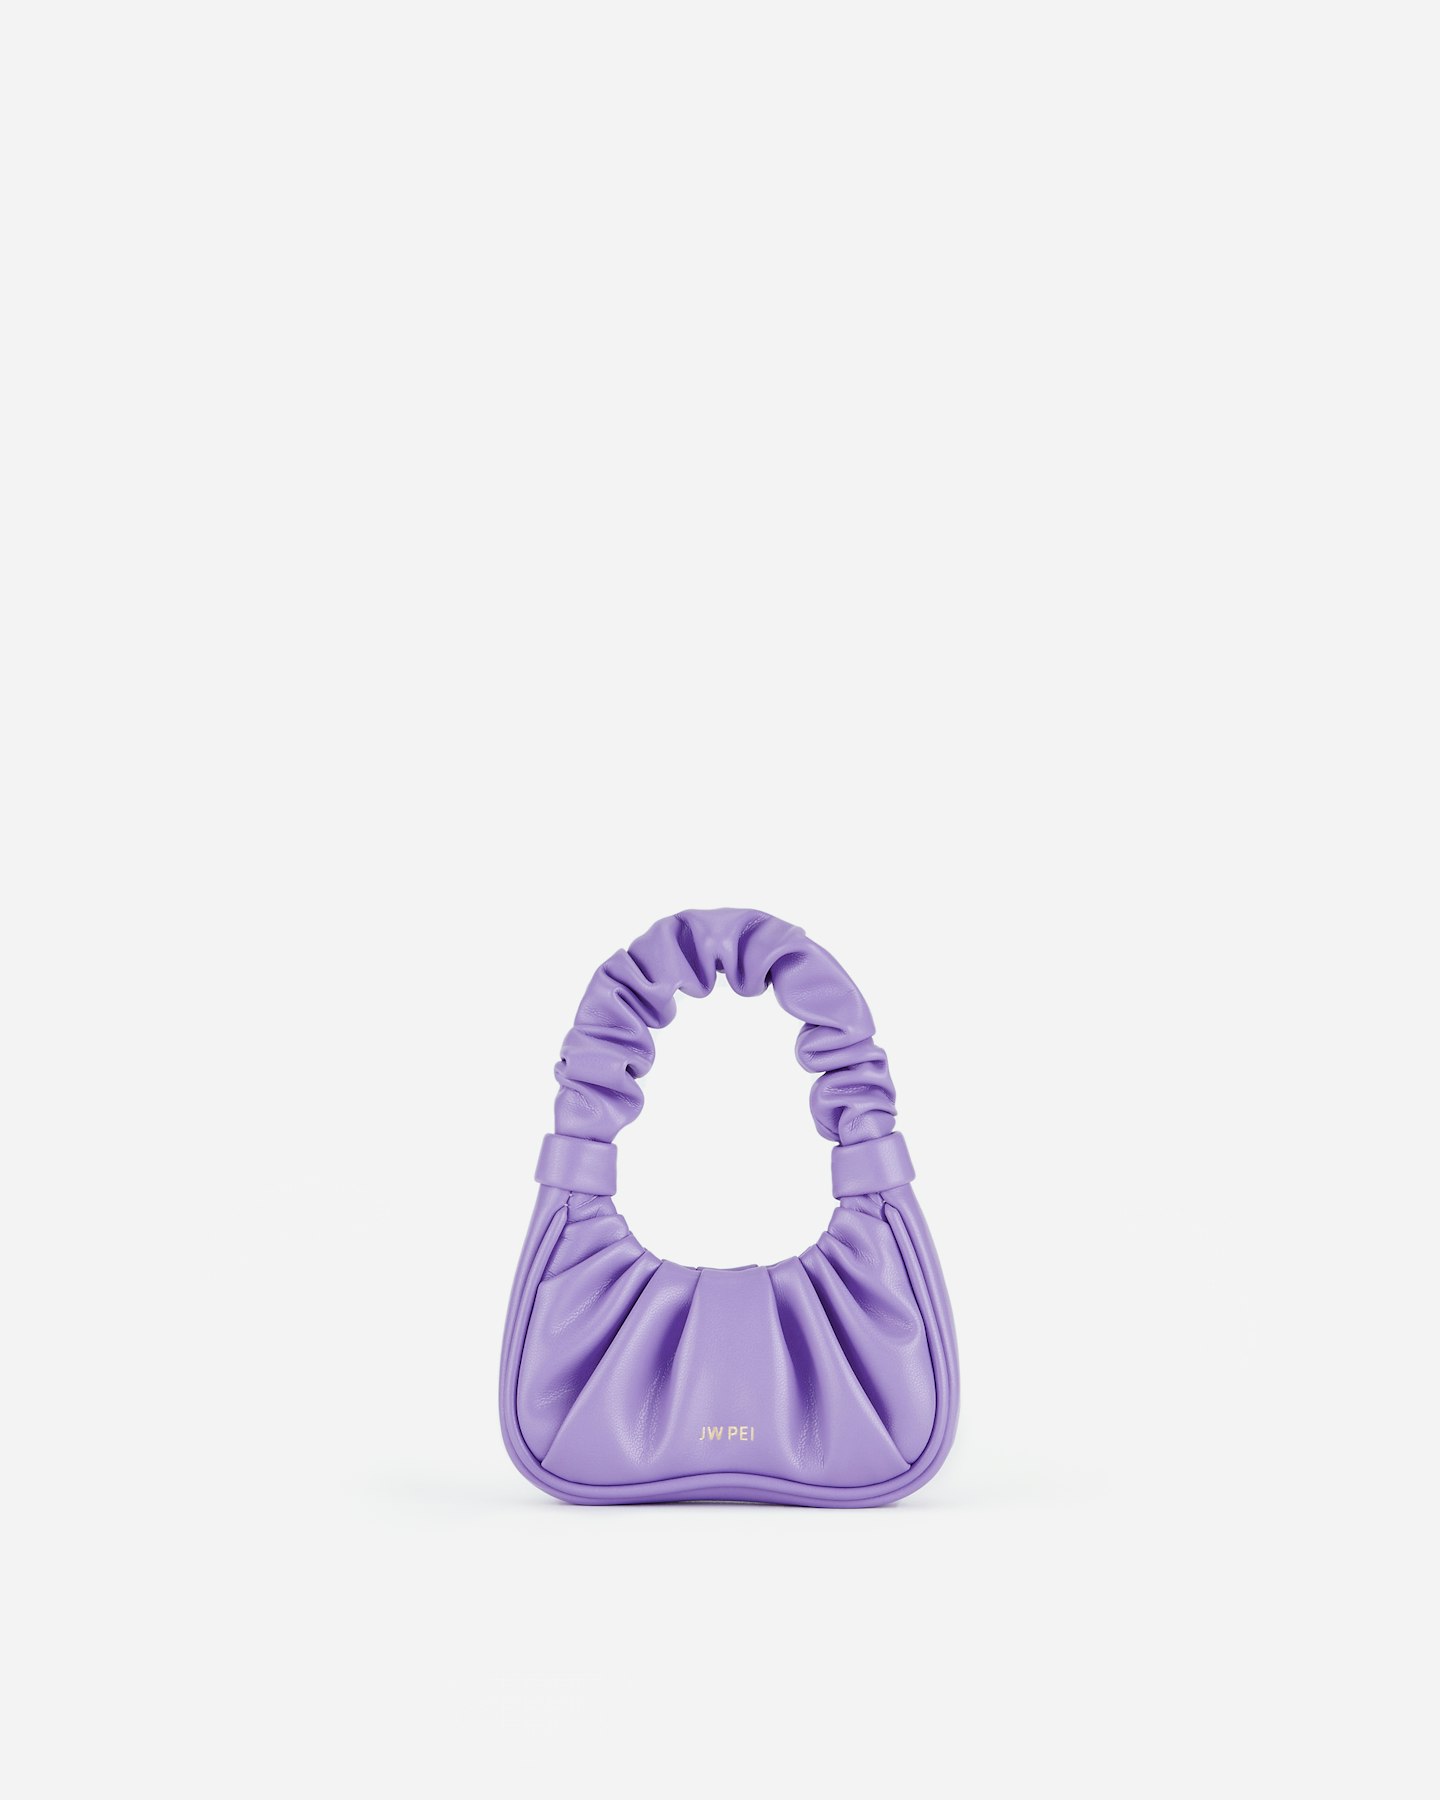 Wednesday – JW Pei, Super Mini Gabbi Bag, £45